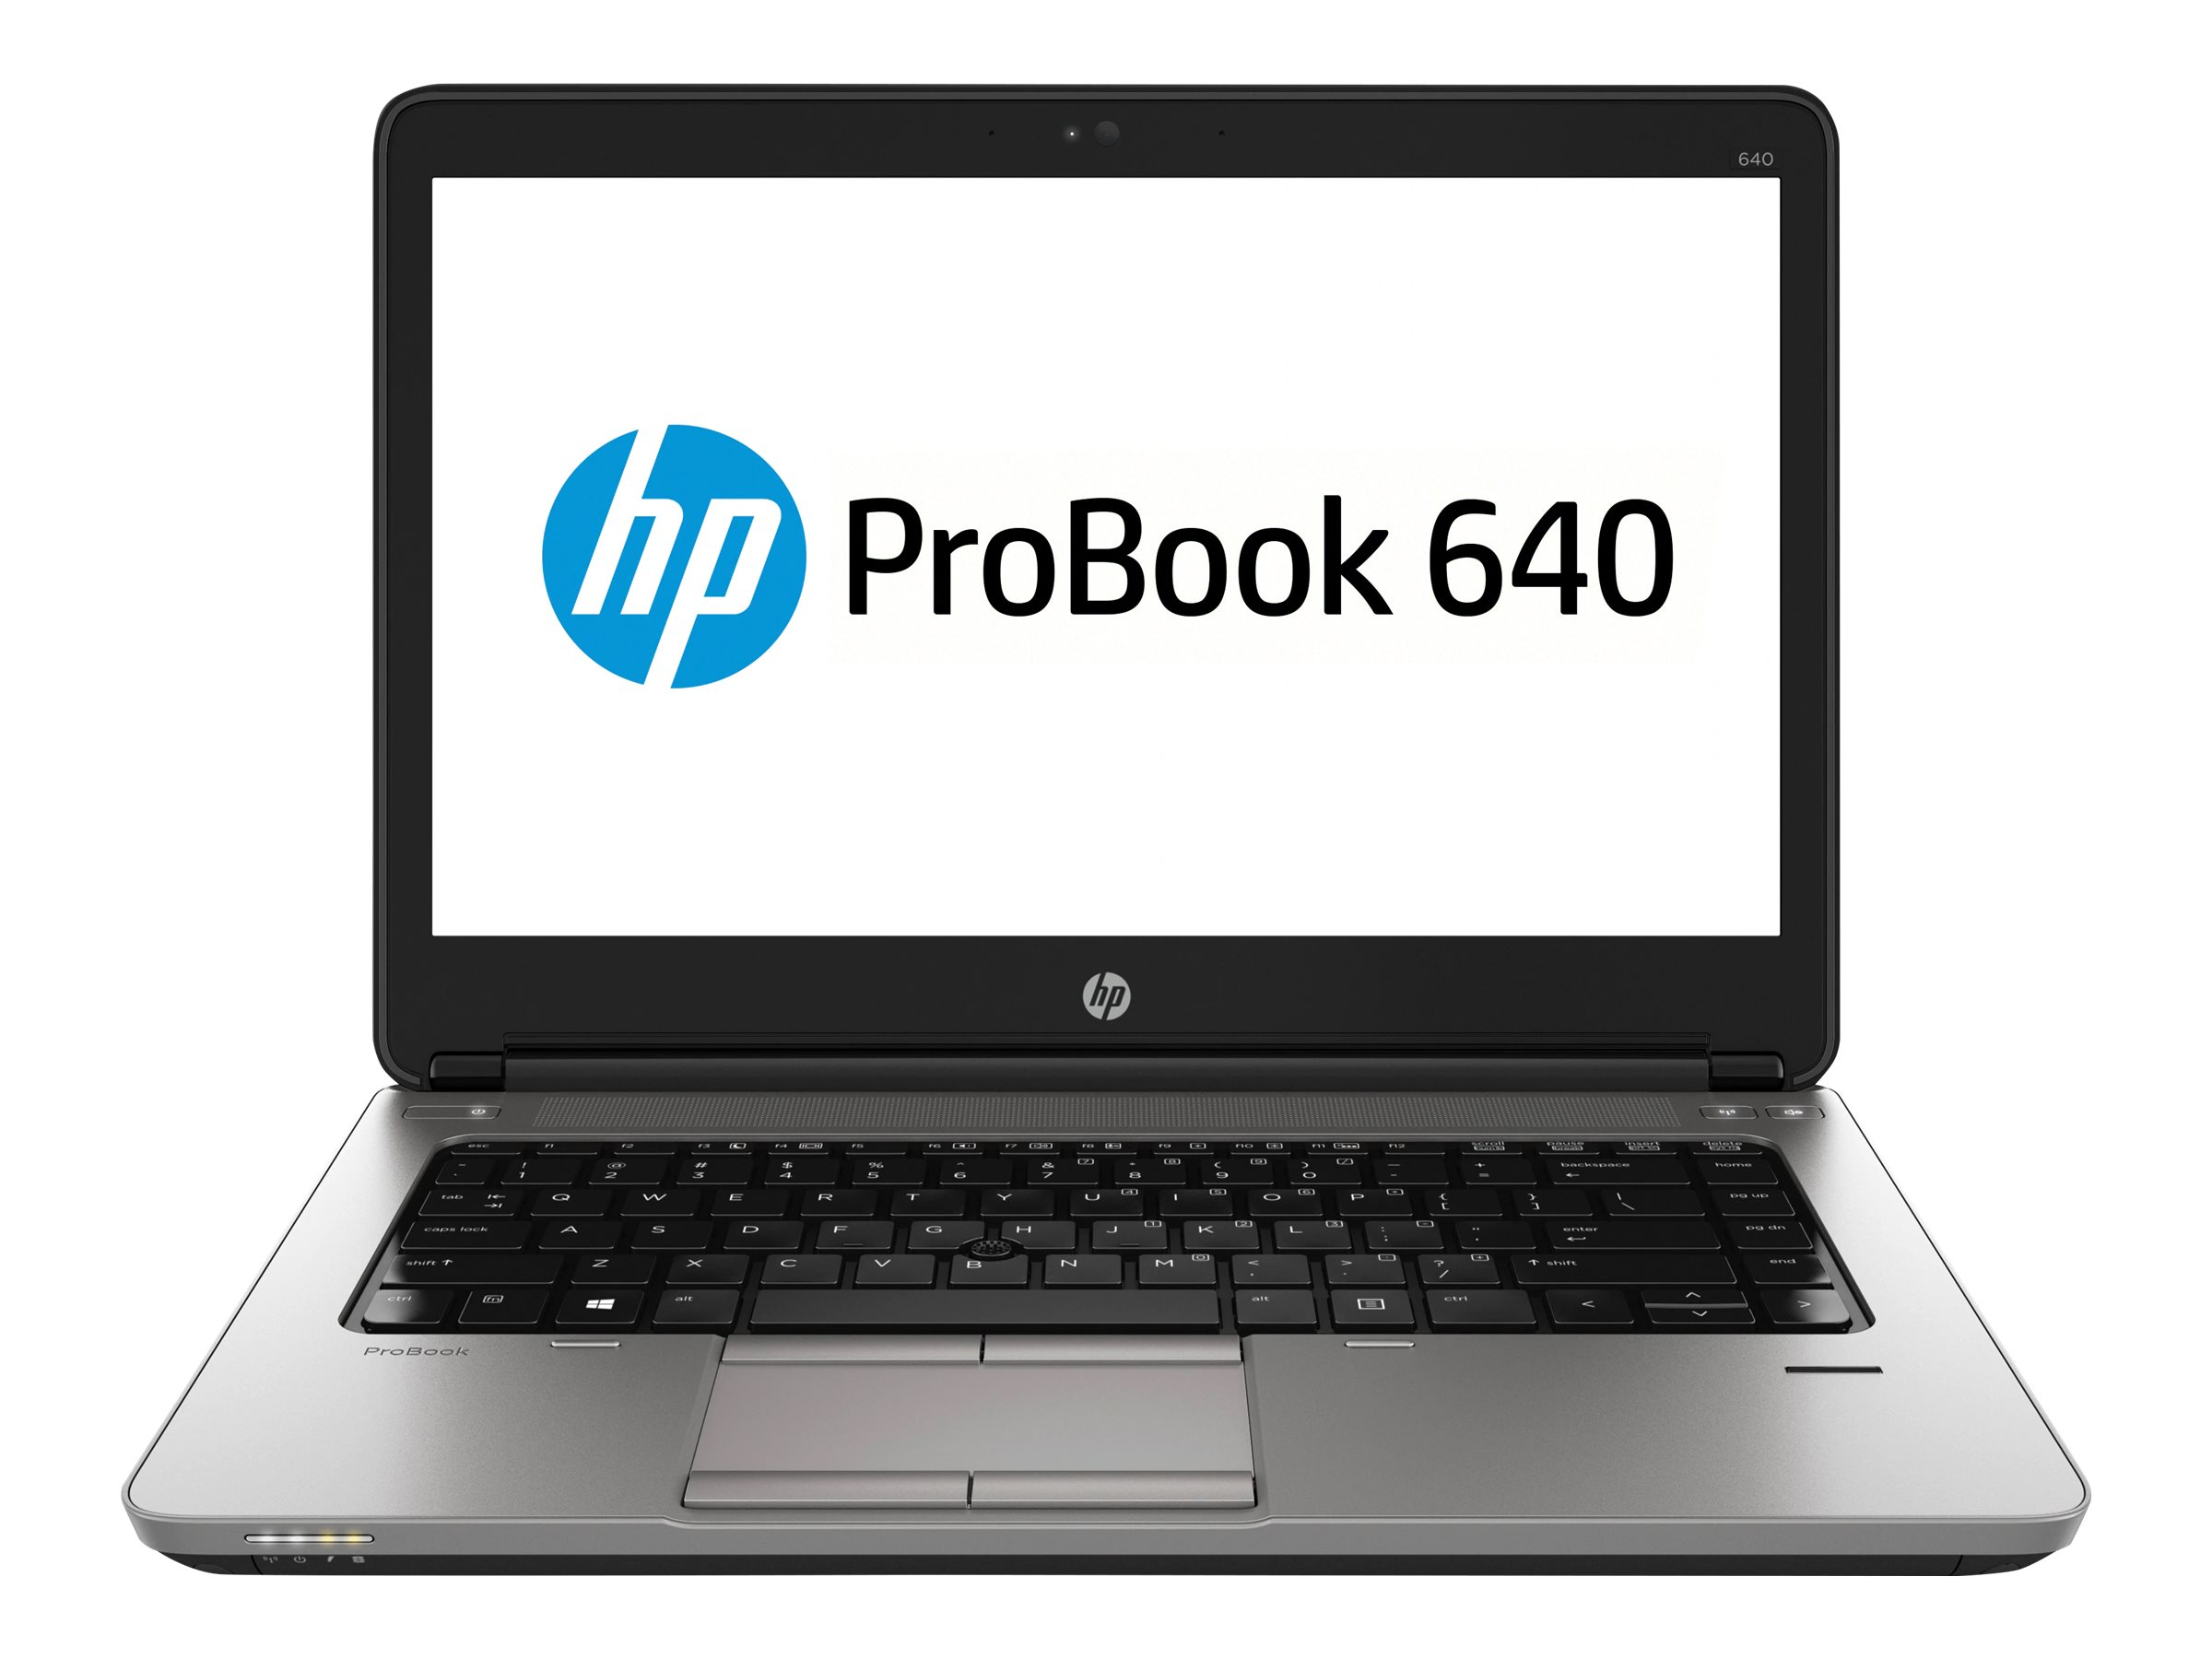 HP ProBook 635 Aero G7 Notebook PC review